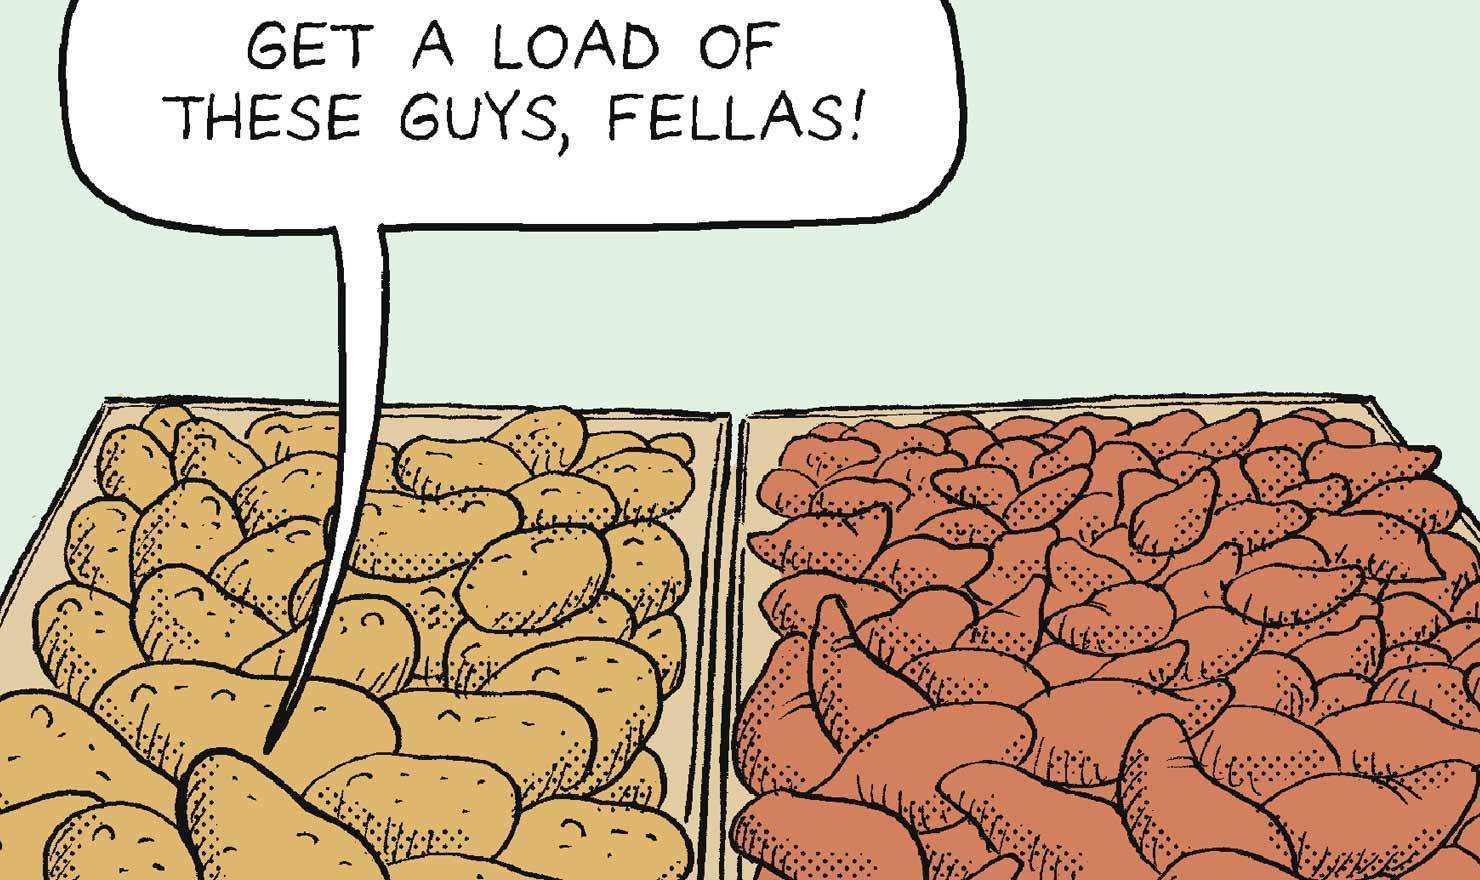 Ap-PEALING Comics For Potato Day